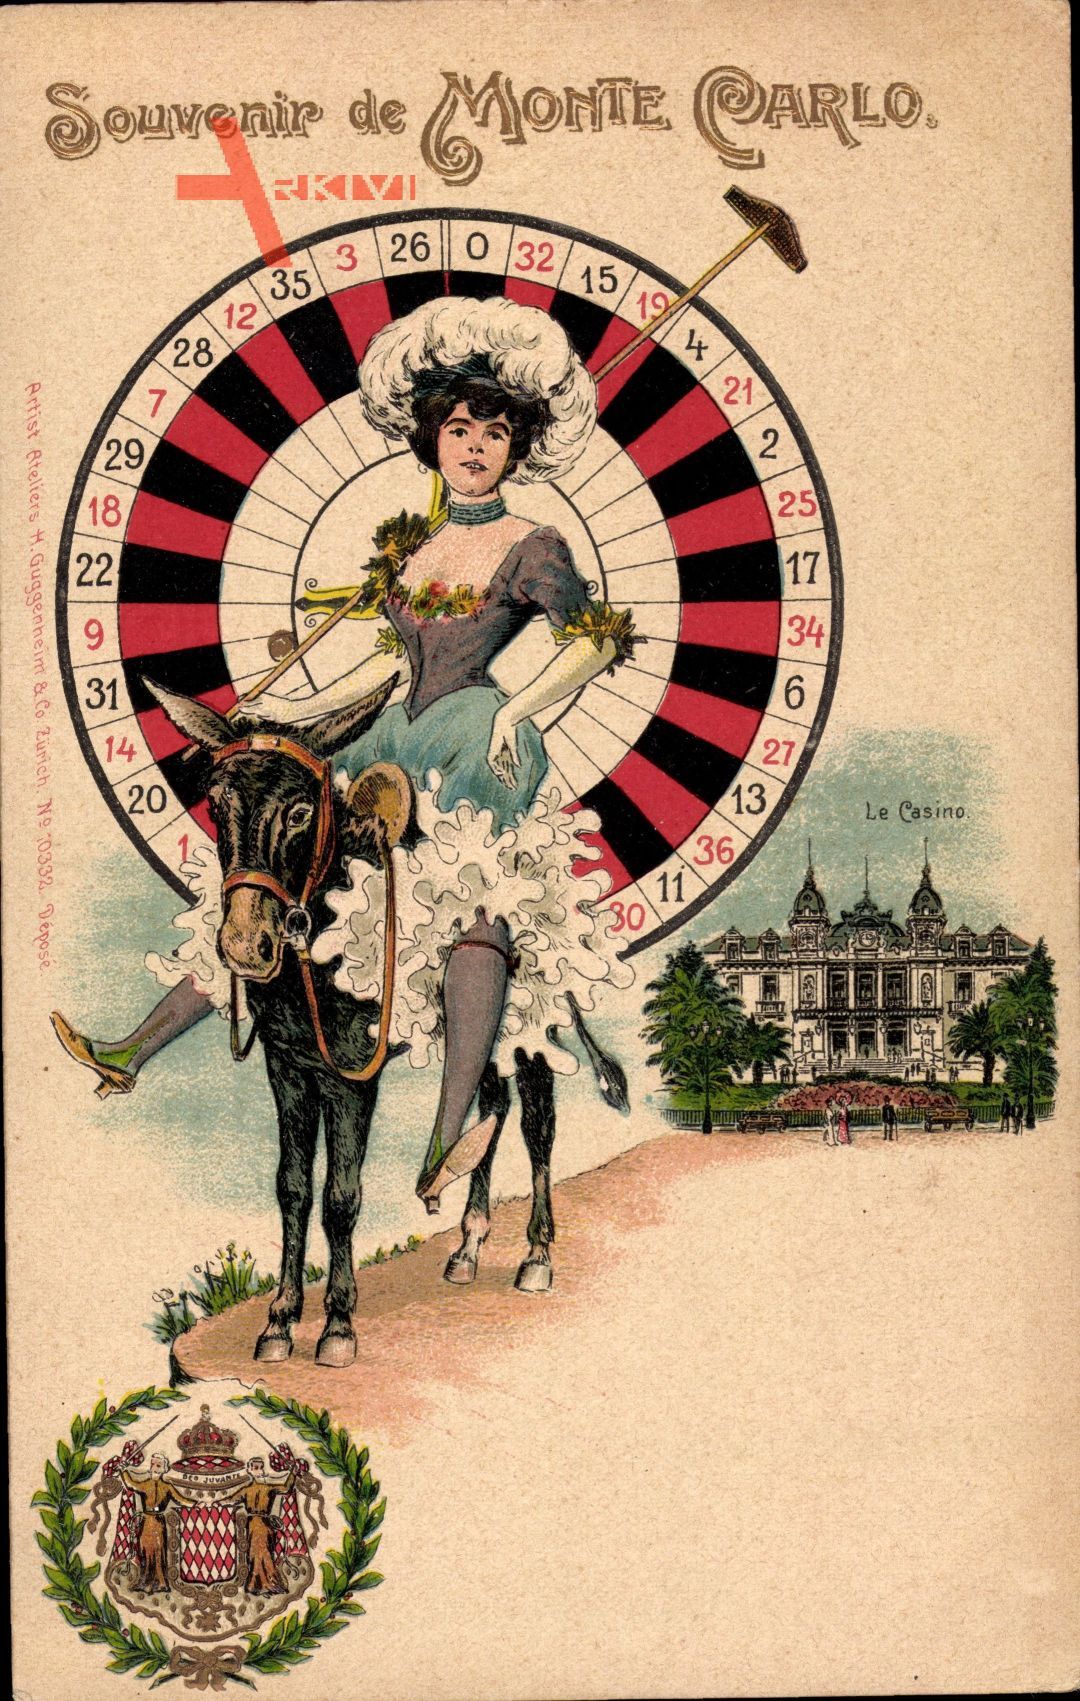 Monte Carlo Monaco, Casino, Roulette, Frau auf einem Esel